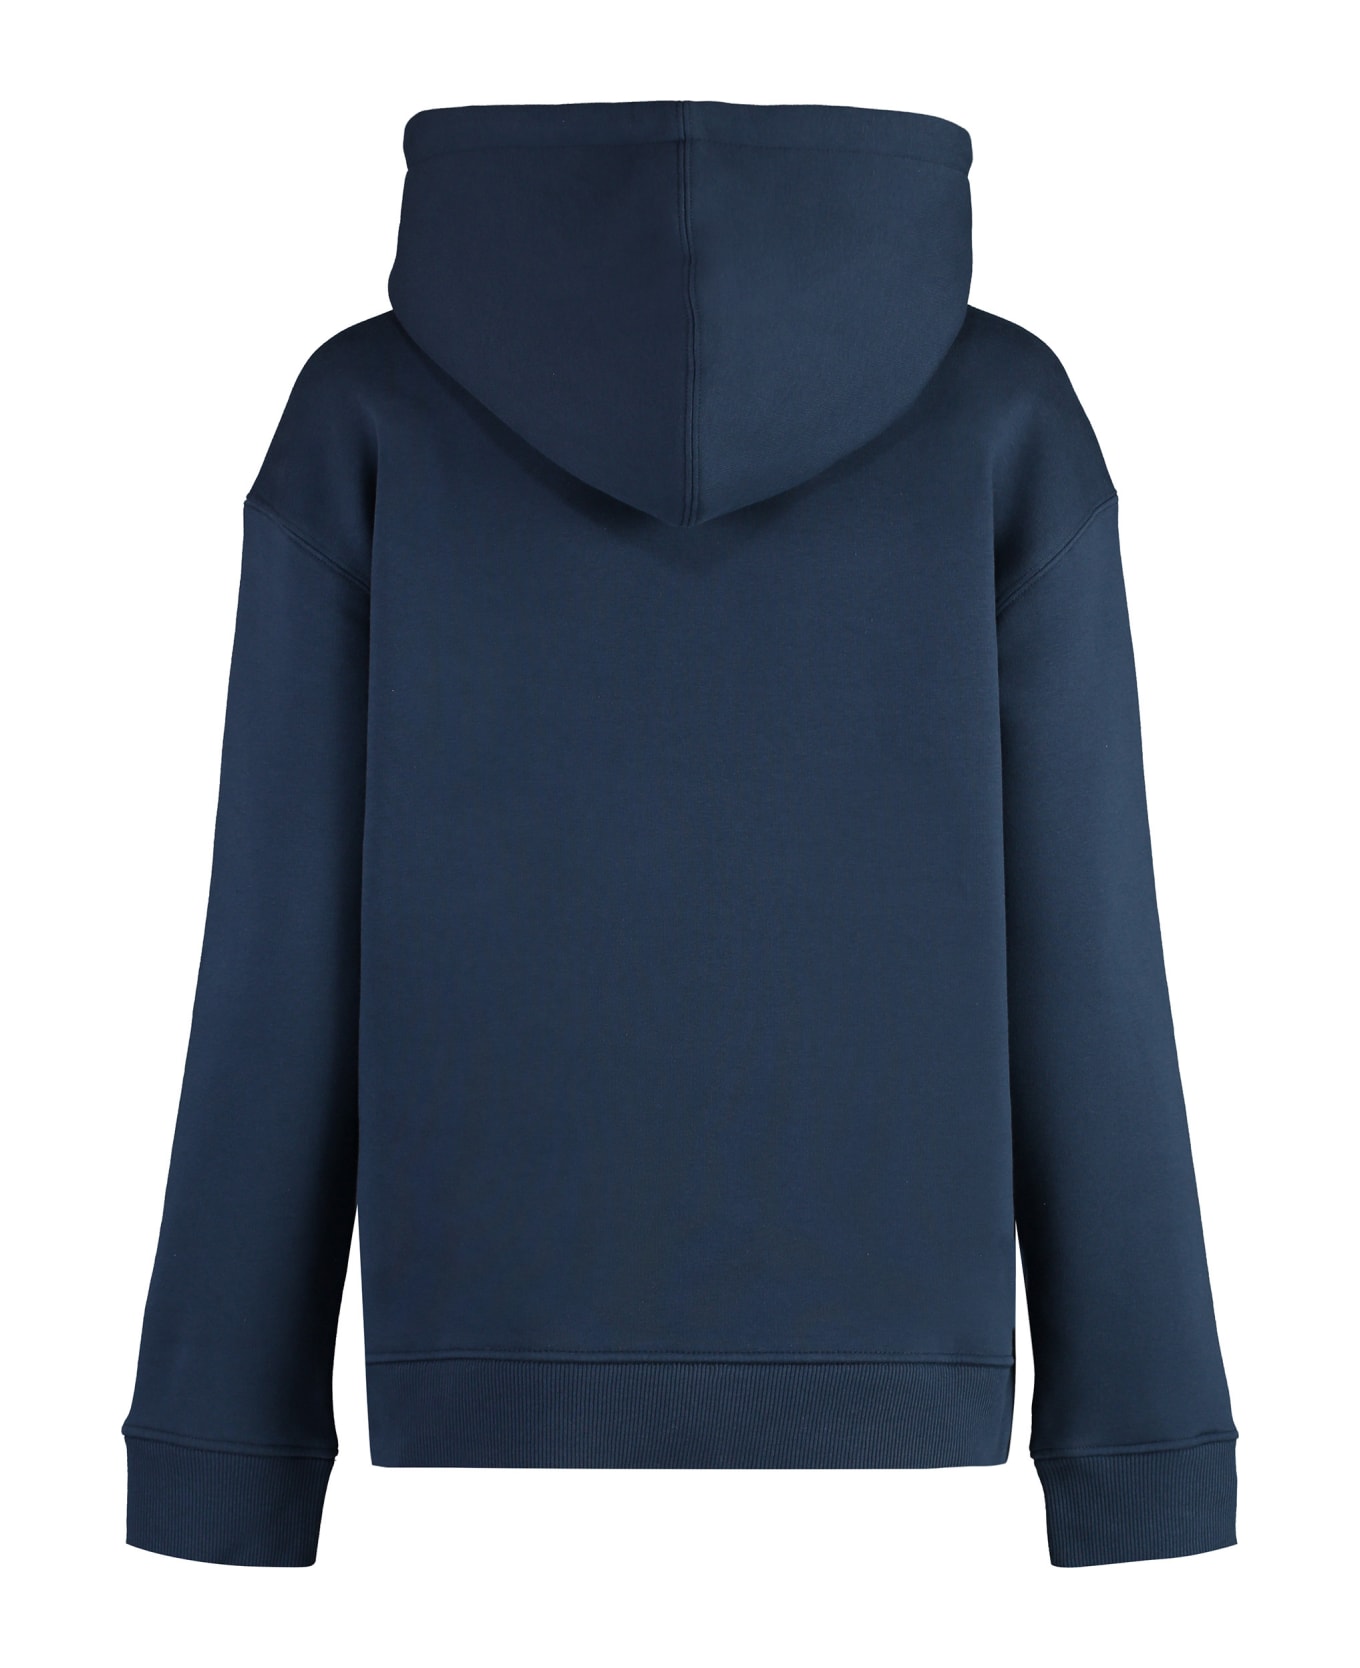 'S Max Mara Agre Hooded Sweatshirt - blue フリース